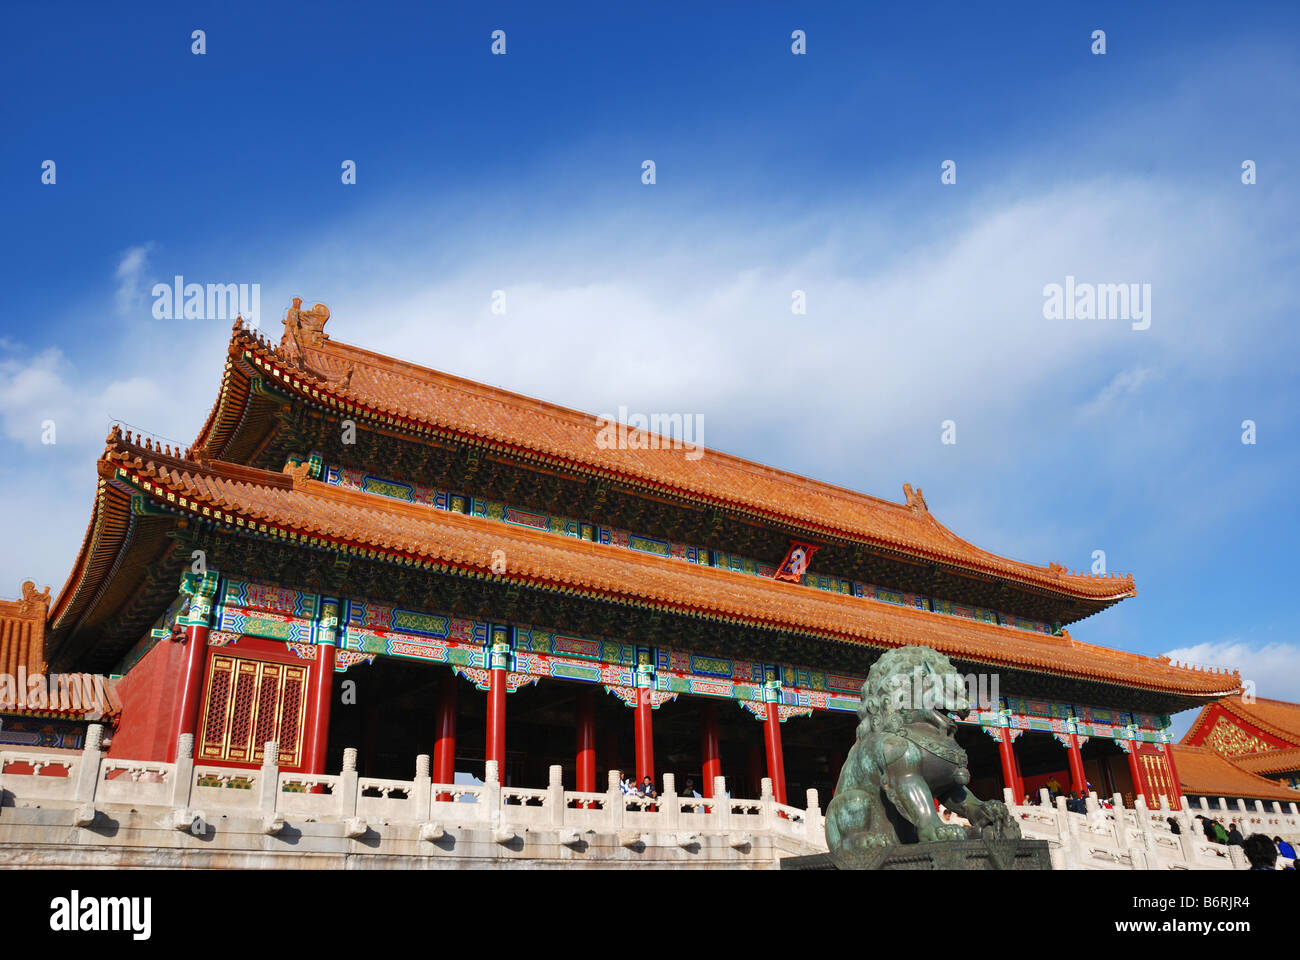 Forbidden City,the landmark of Beijing, China. Stock Photo